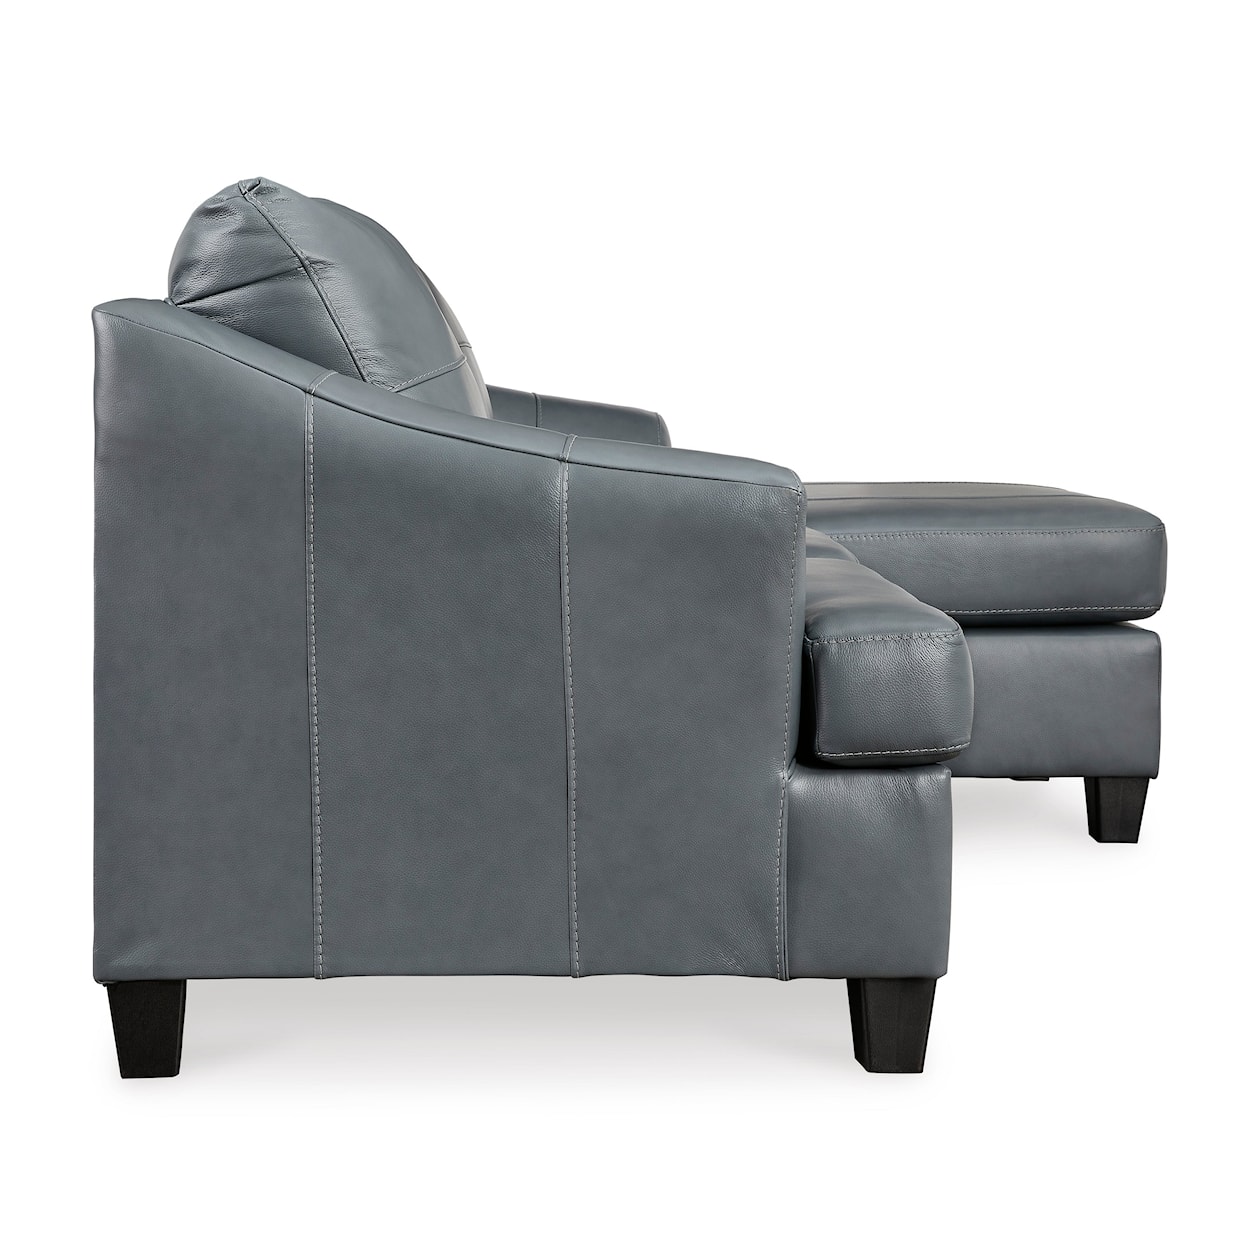 StyleLine Genoa Sofa Chaise